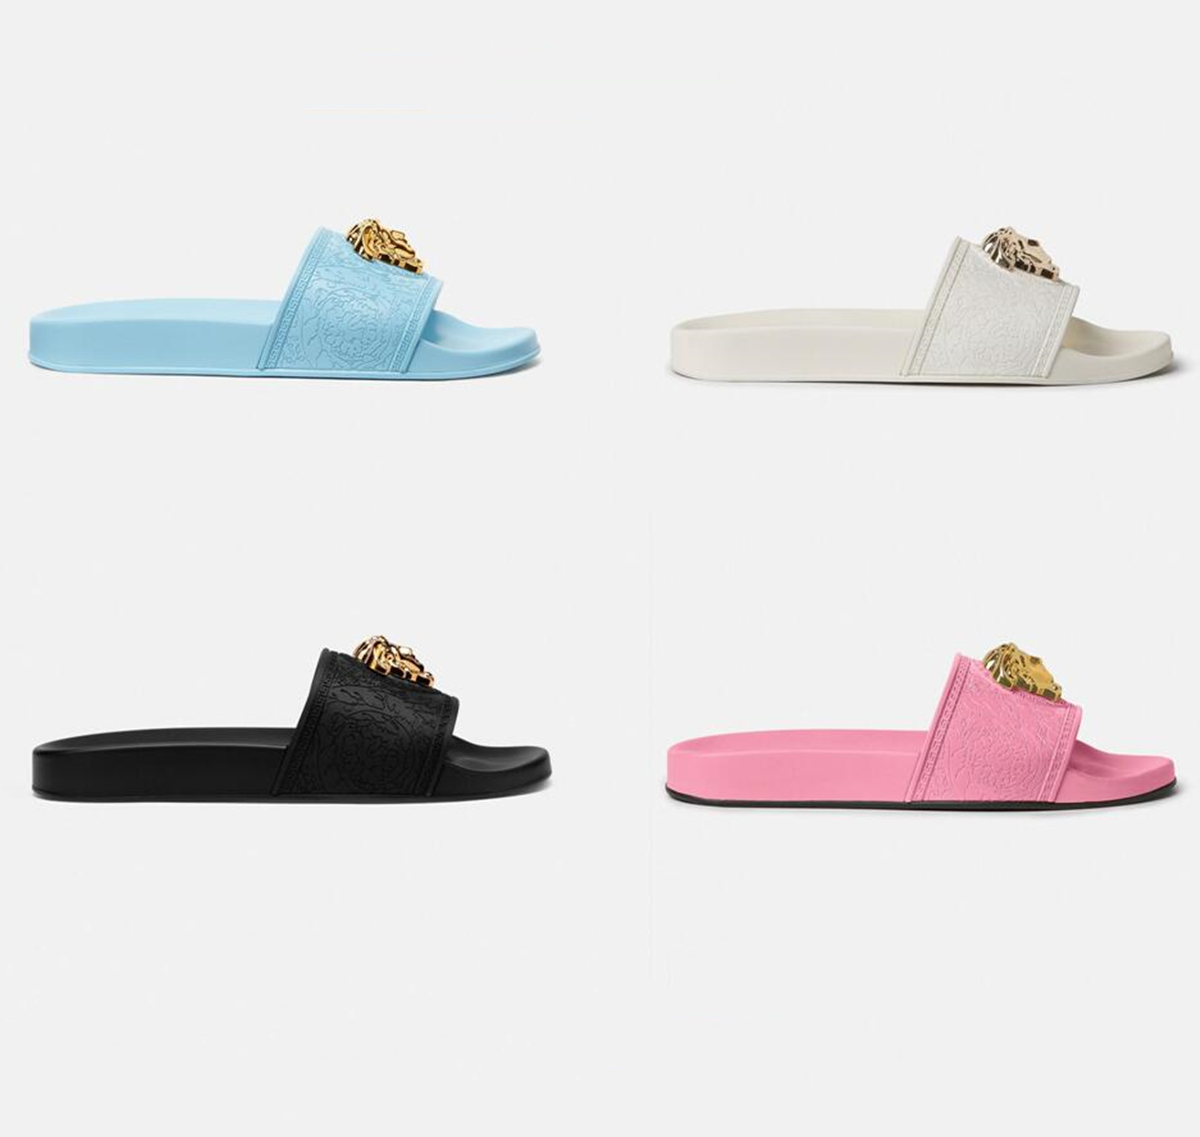 

Men Women Slide Sandals Designer Slippers Shoes Luxury Slides Summer Fashion Wide Flat Slippery Thick Sandal Slipper size 35-45 with box dustbag